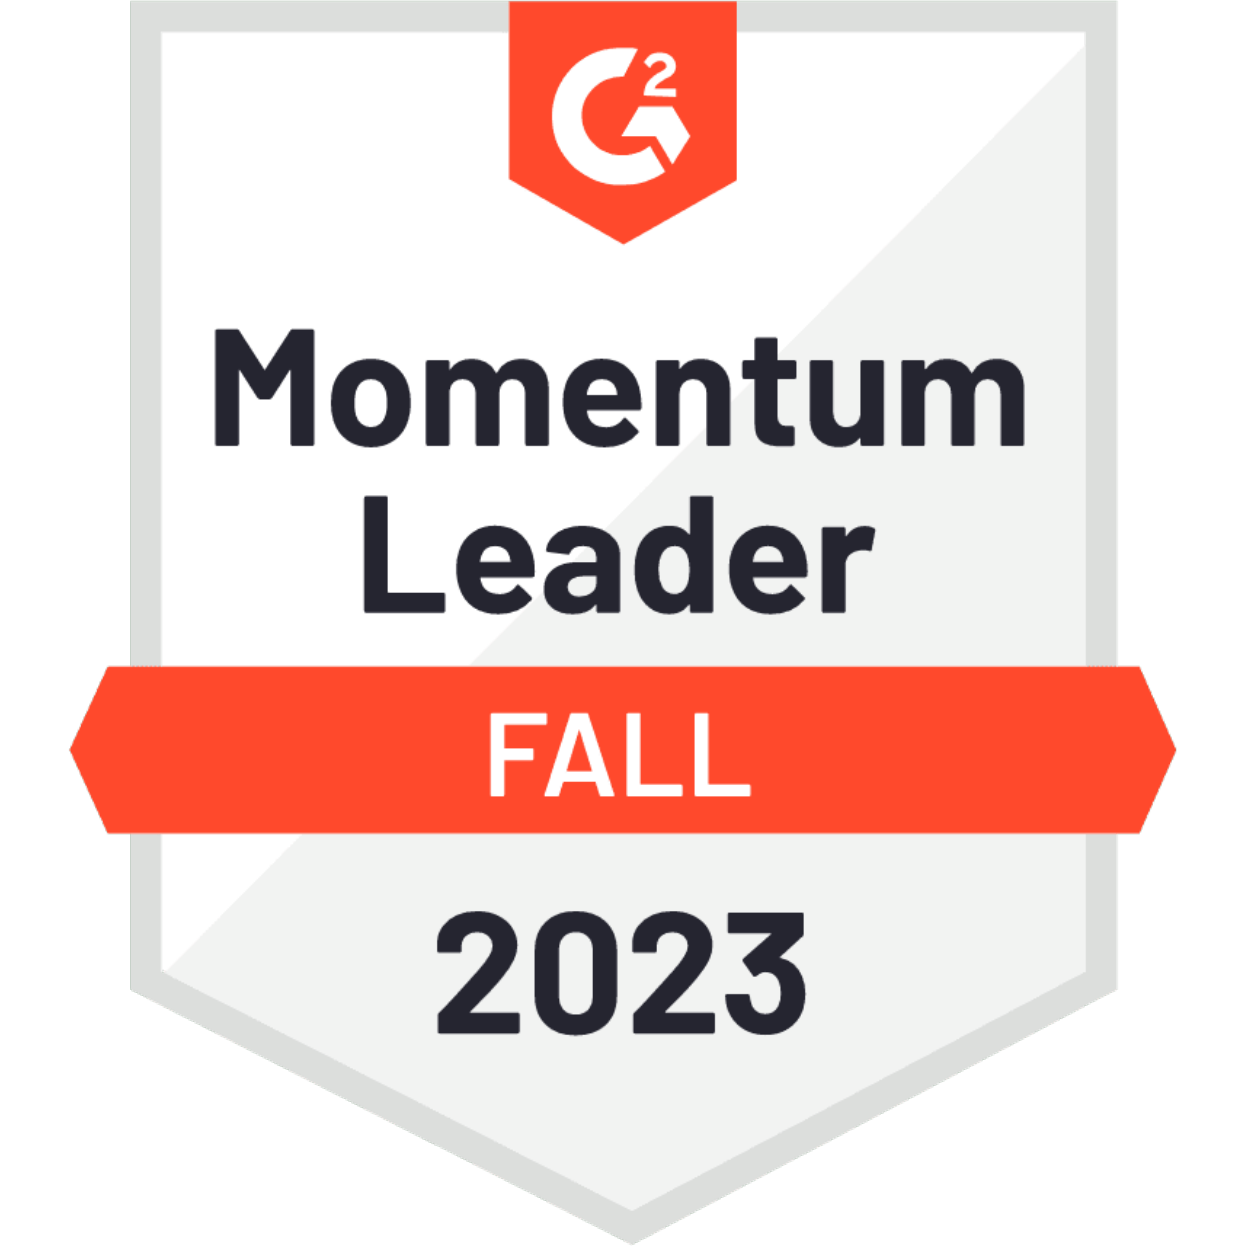 Momentum_Leader_Fall_2023_600_600_nobg